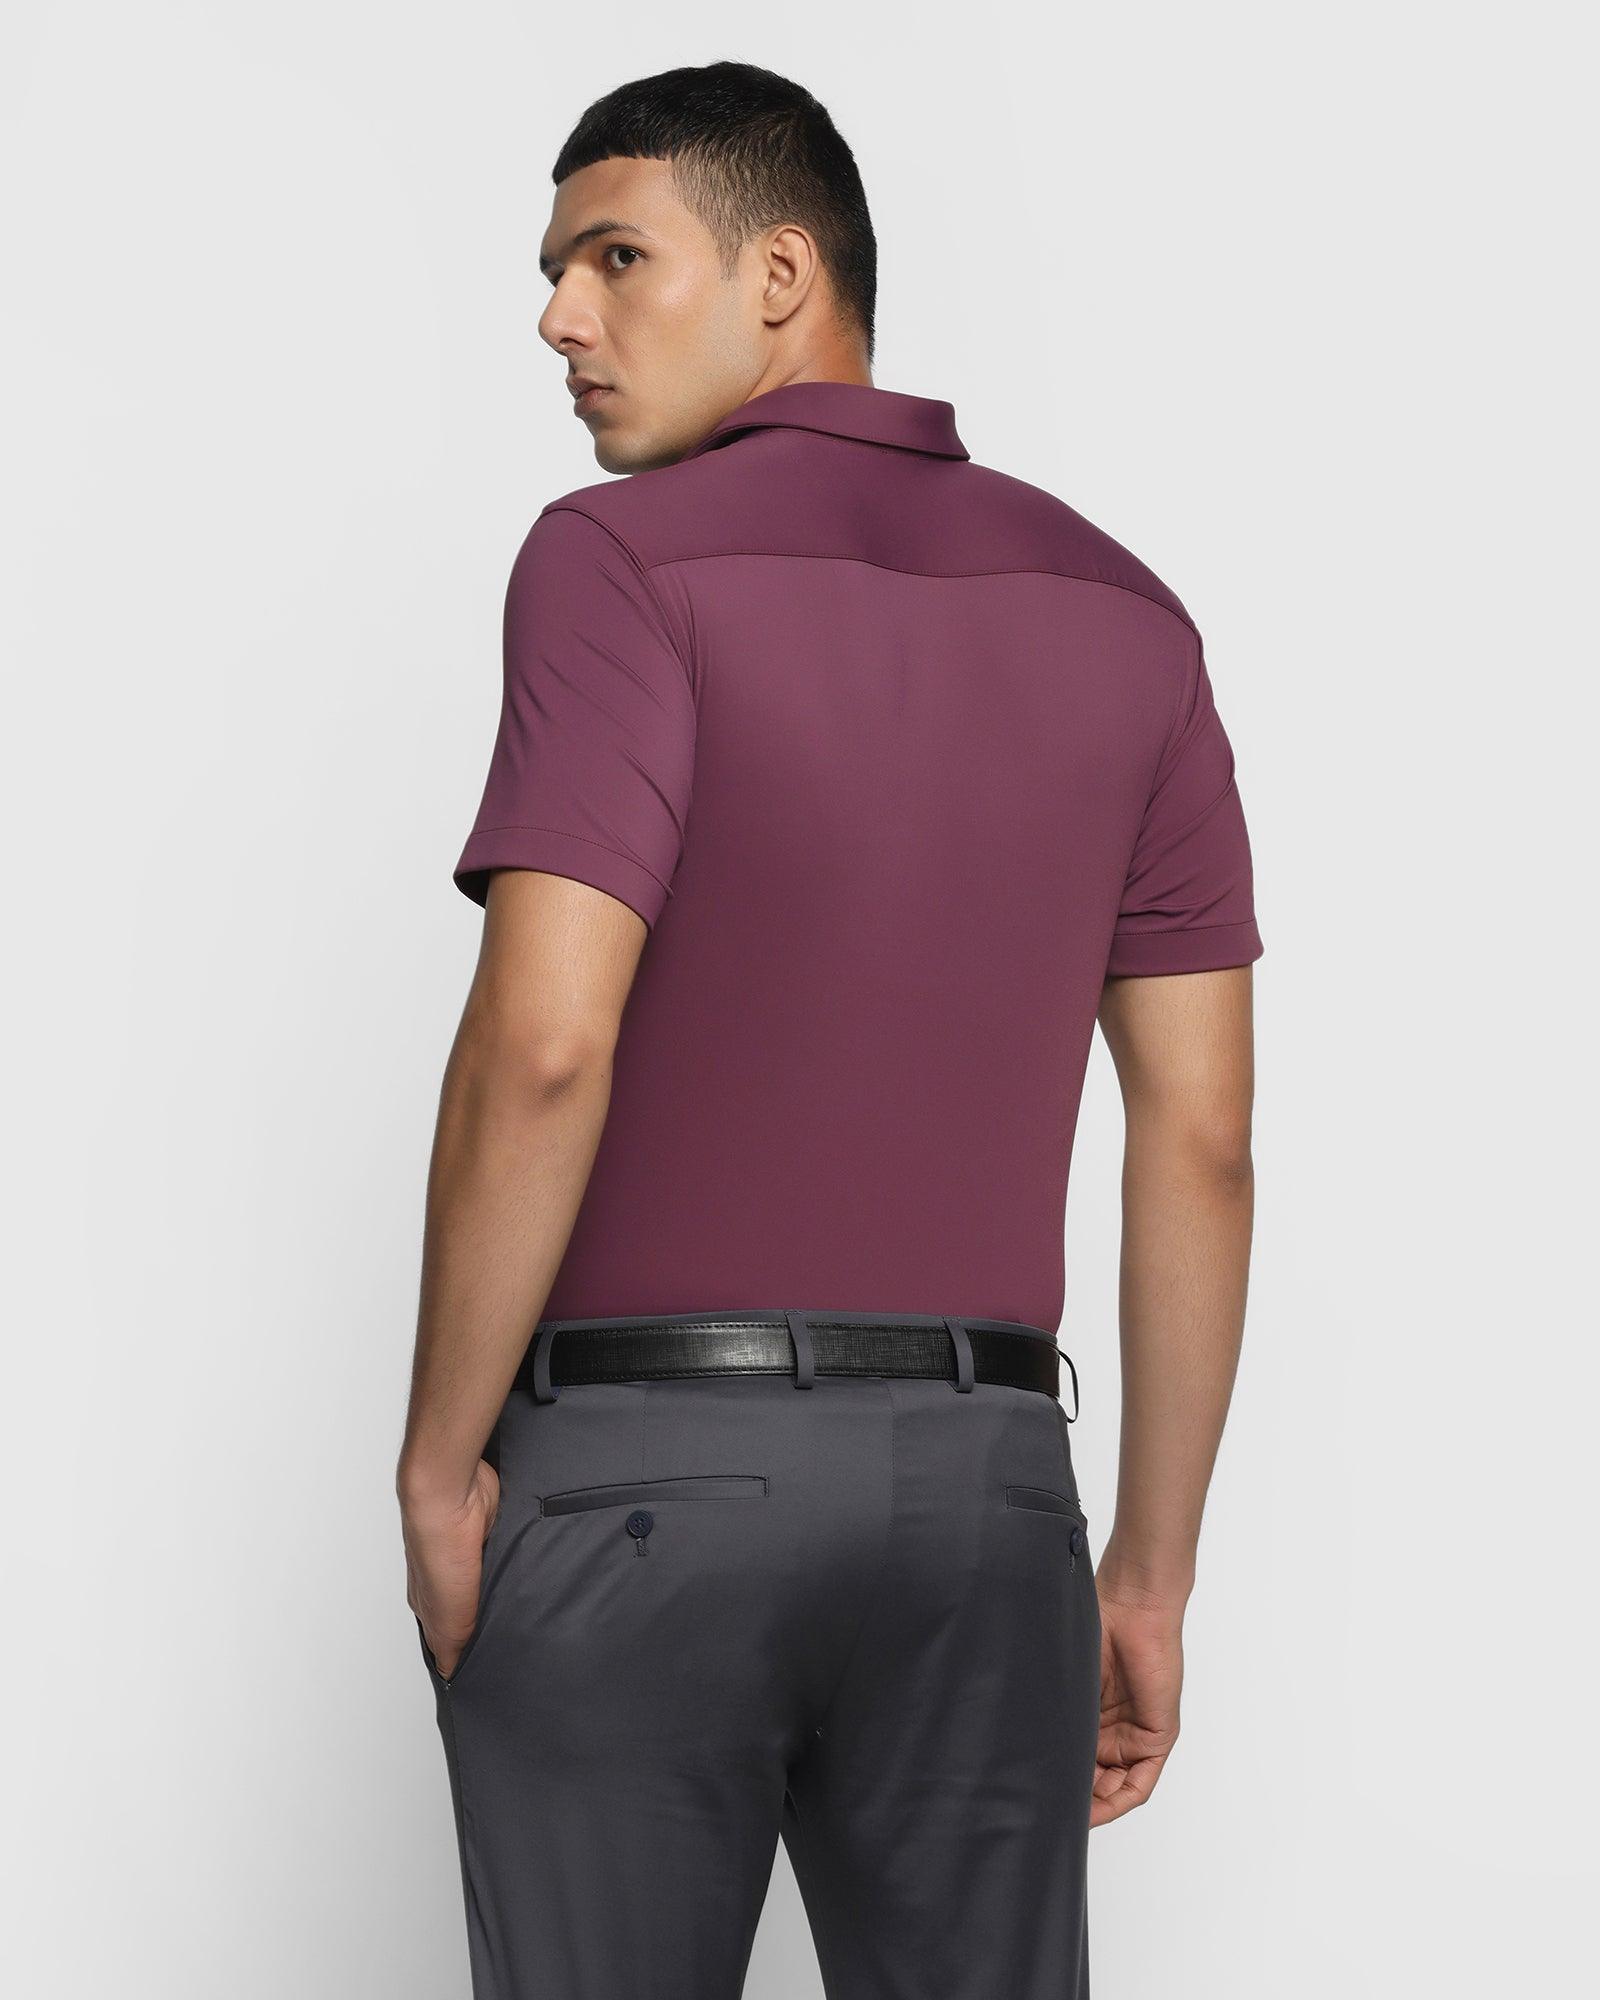 Formal Half Sleeve Plum Solid Shirt - Admin